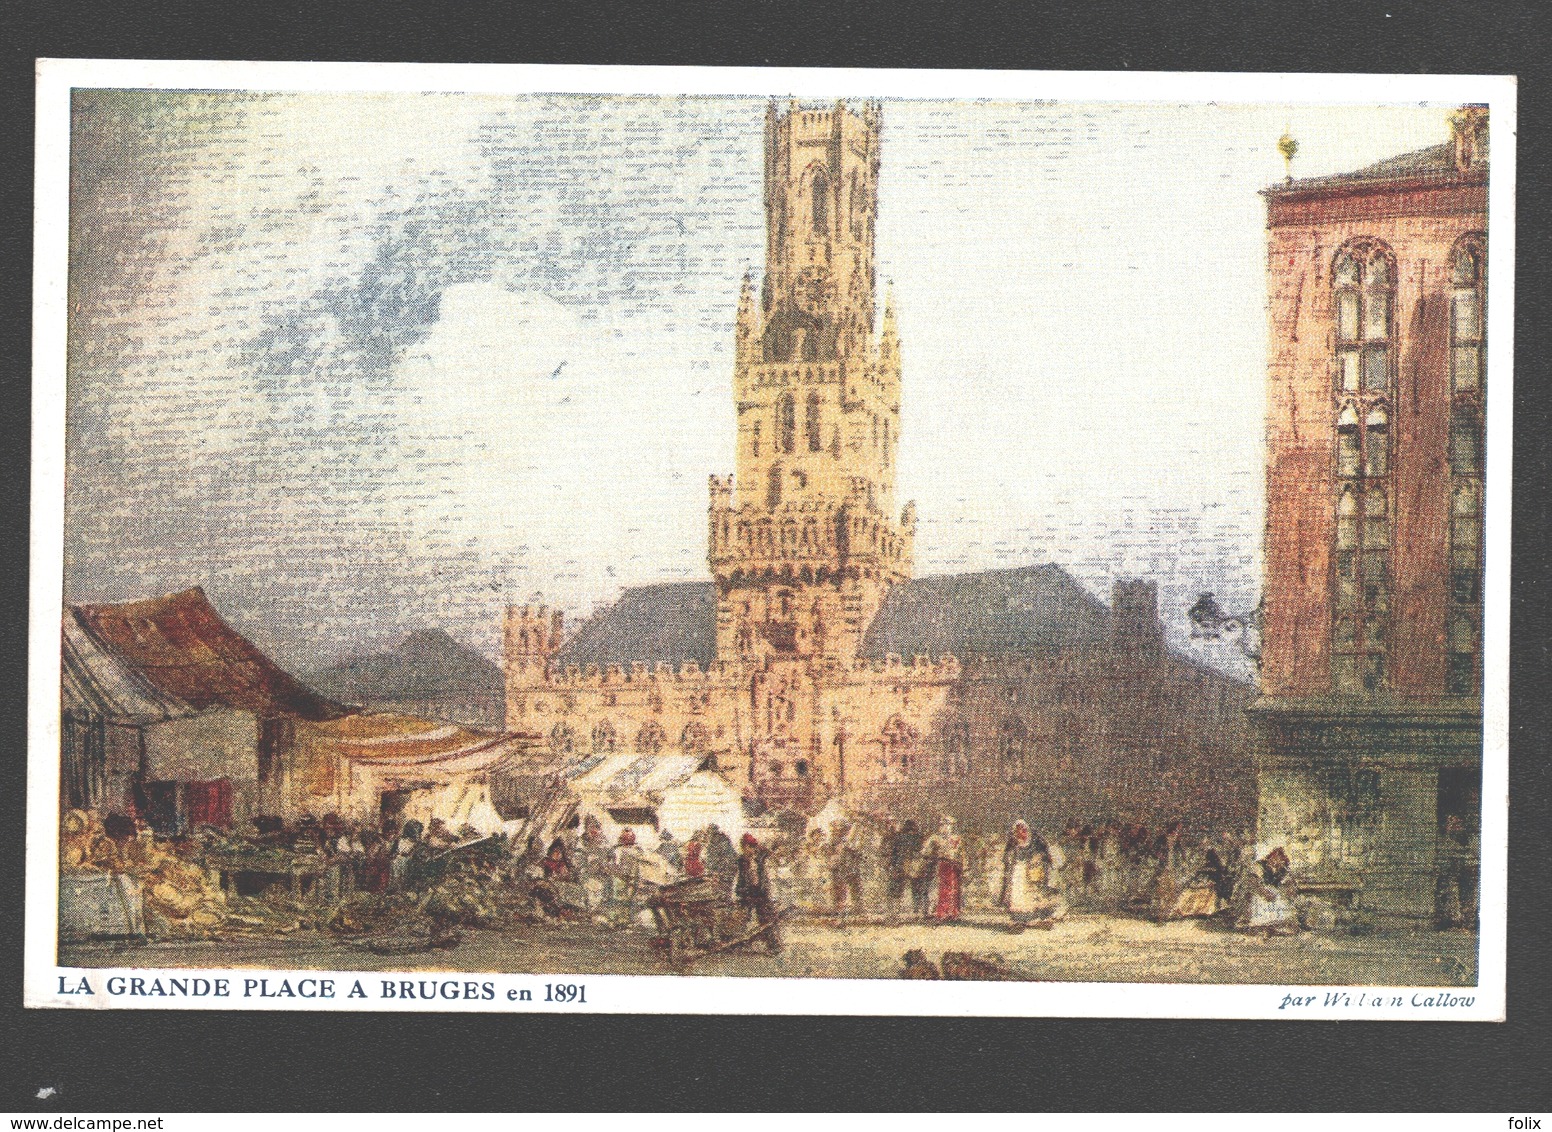 Brugge - La Grande Place à Bruges En 1891 - Schilderij William Callow - Brugge